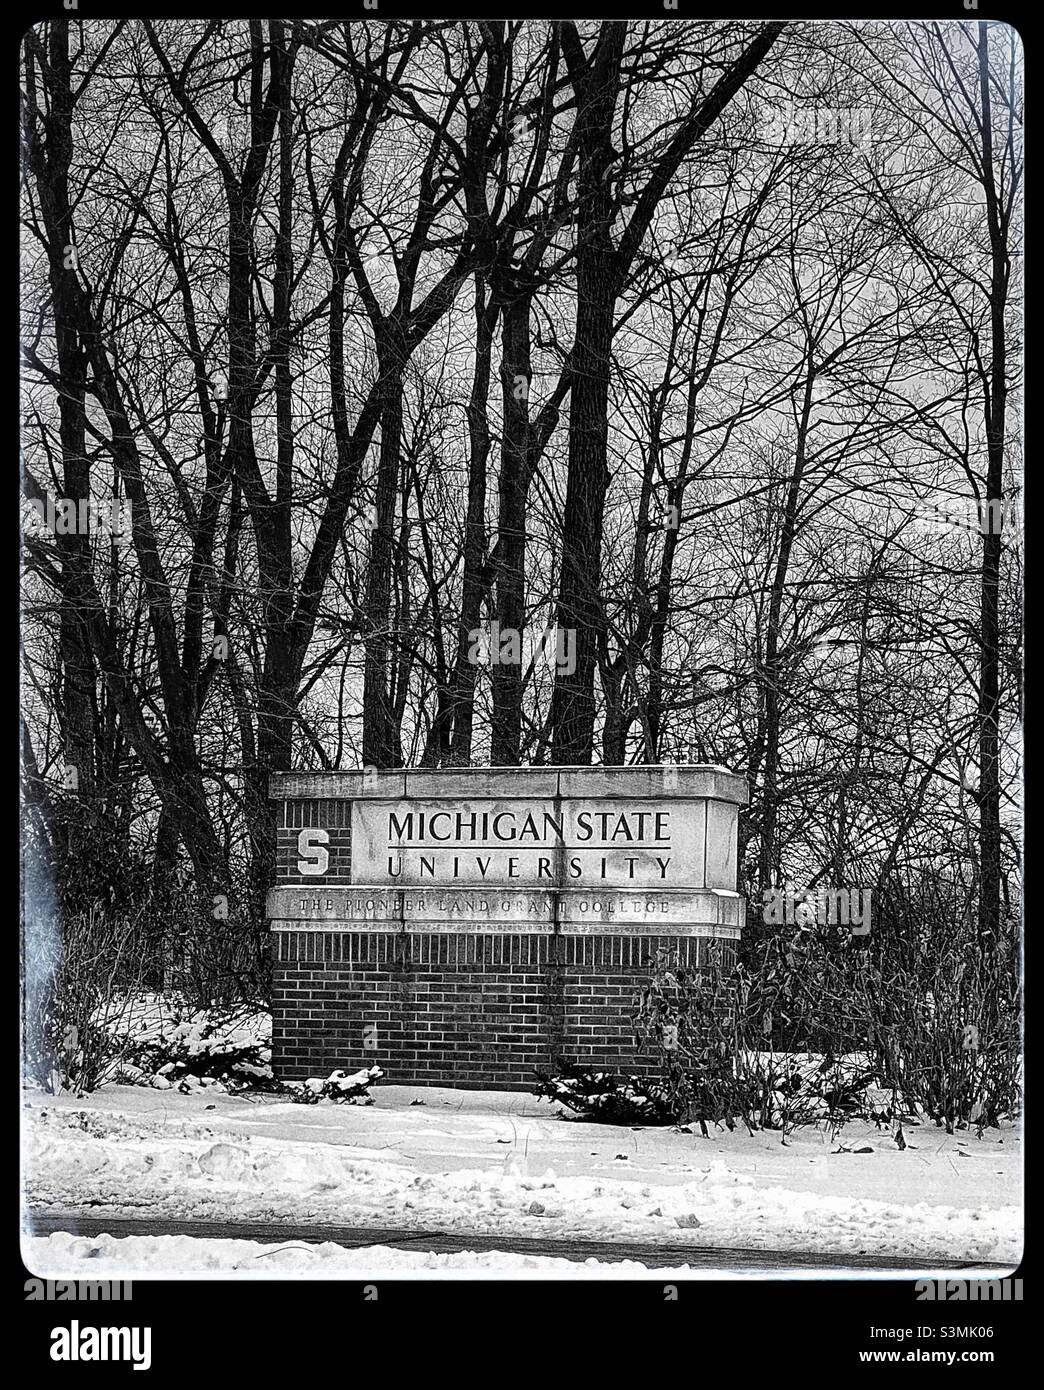 Mur de briques de l'université d'État du Michigan Banque D'Images